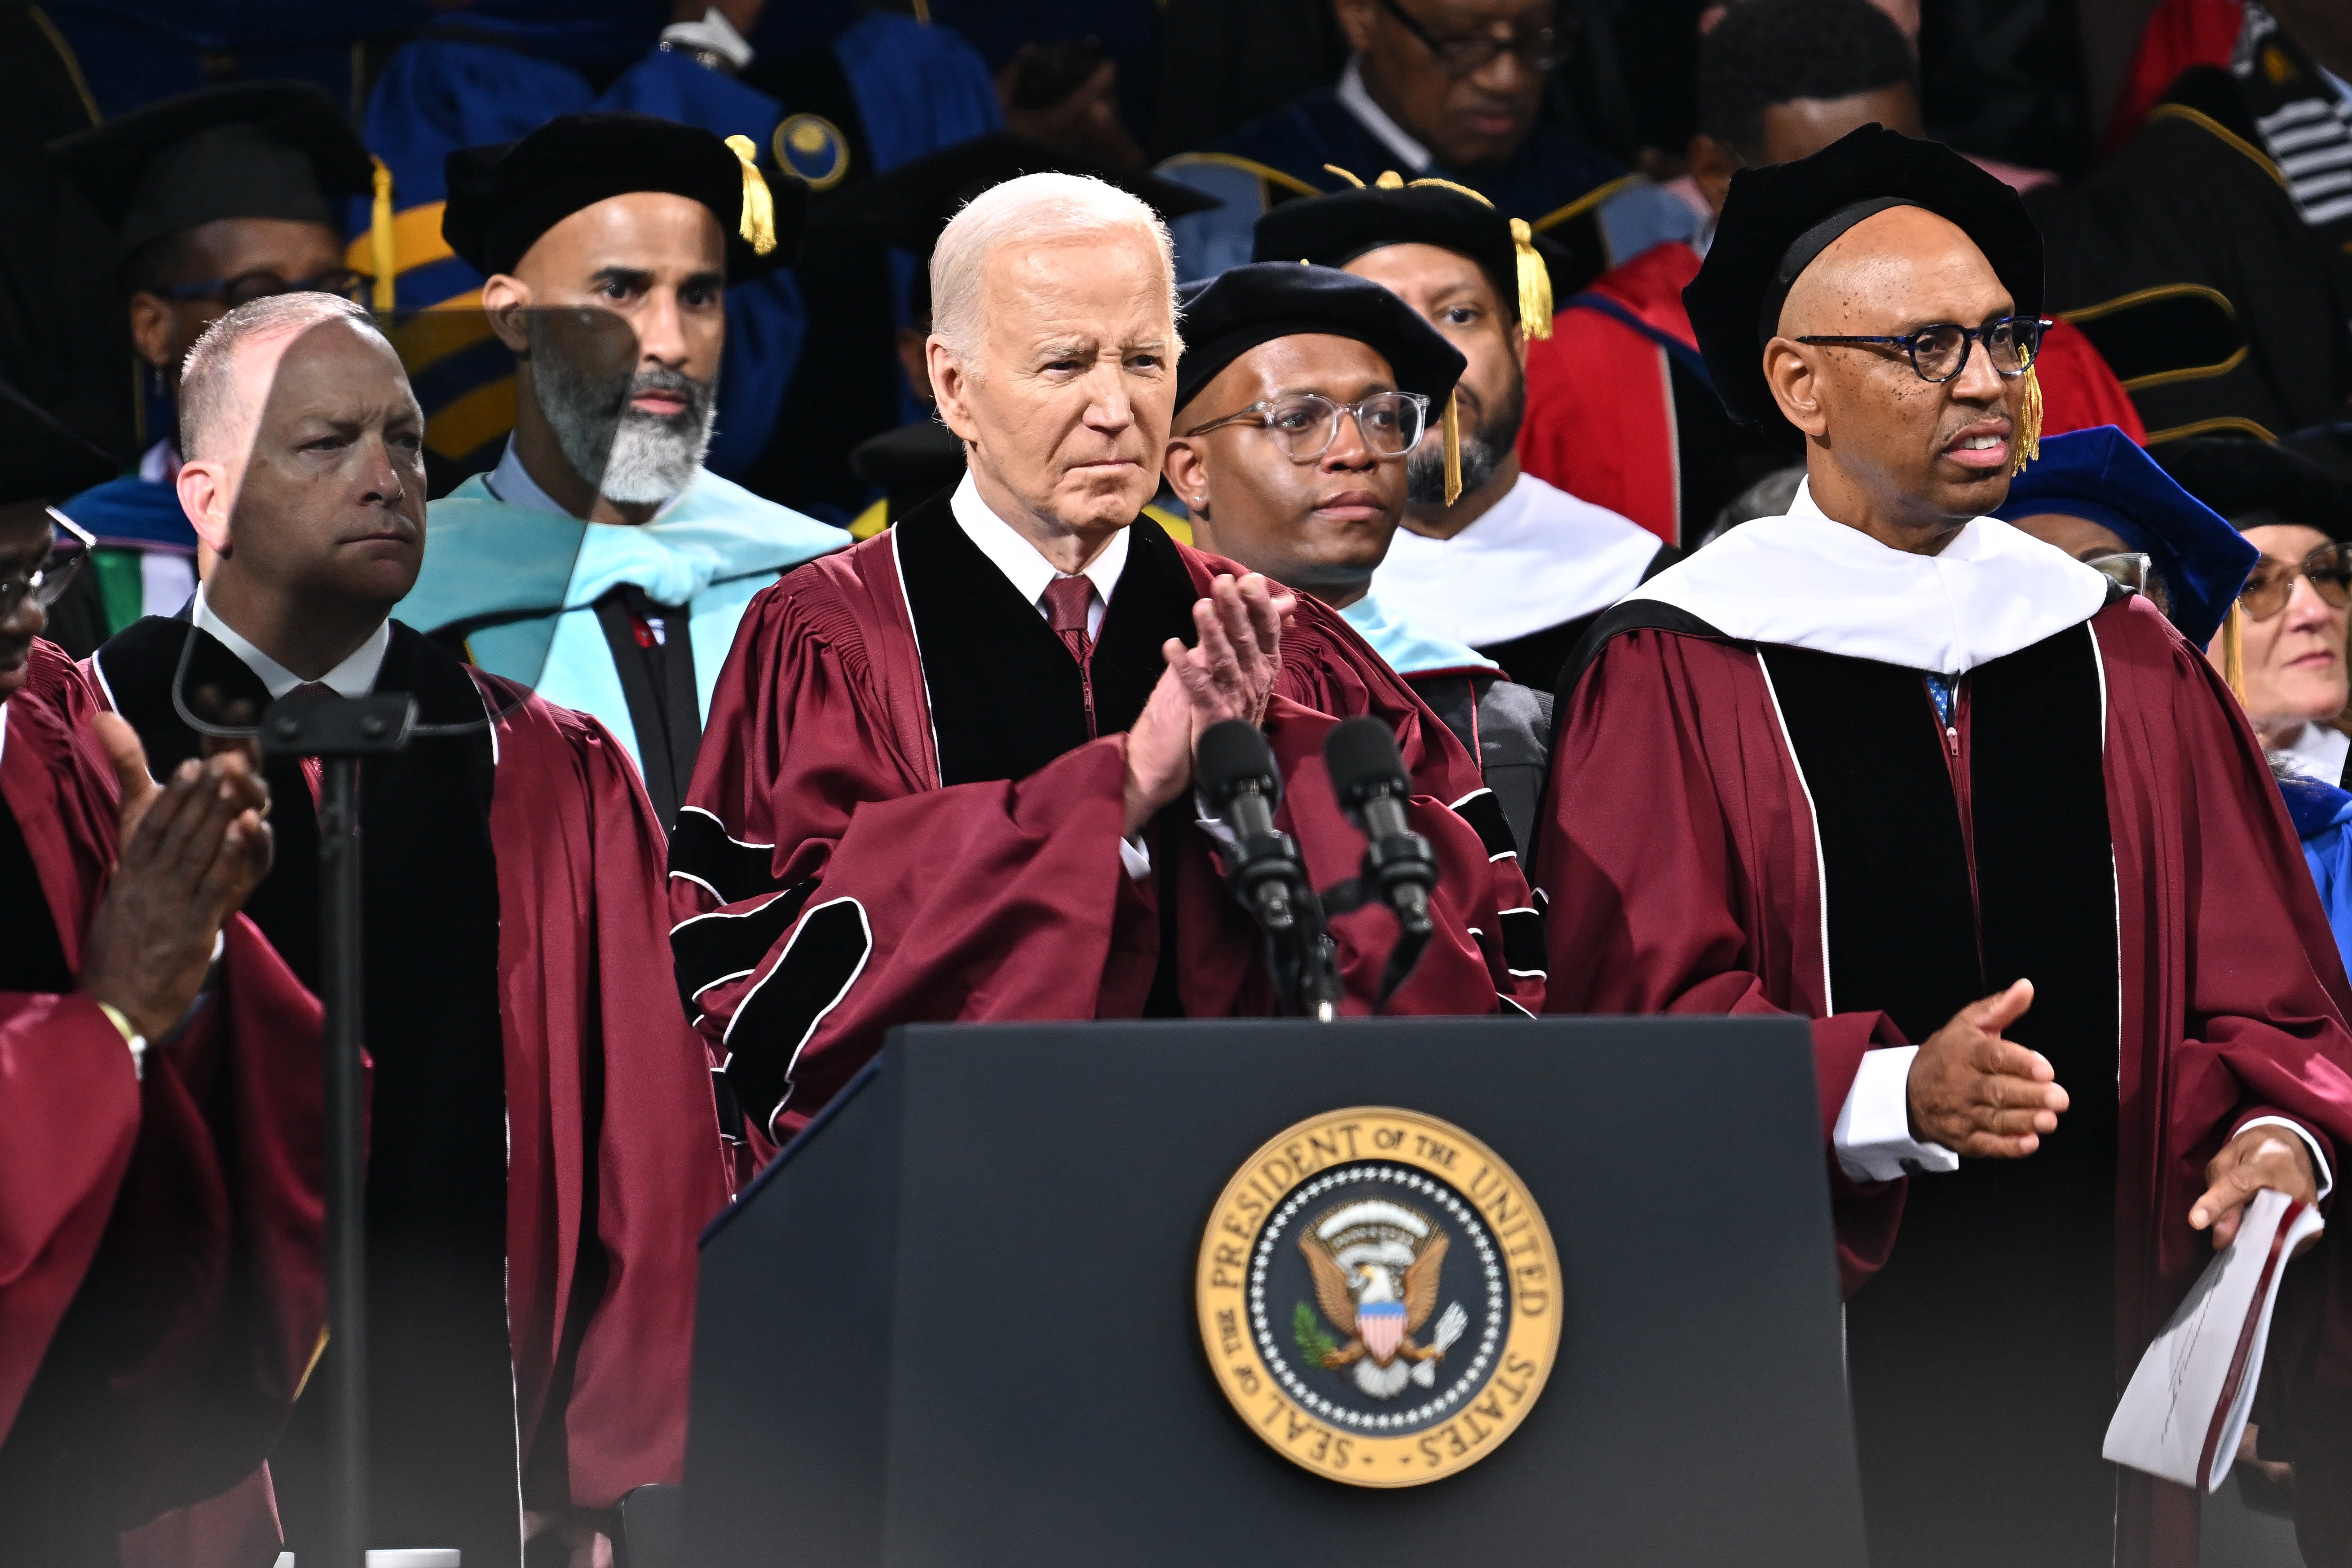 Morehouse Students Turn Their Backs, Walk Out of Graduation as Joe Biden Gives Speech